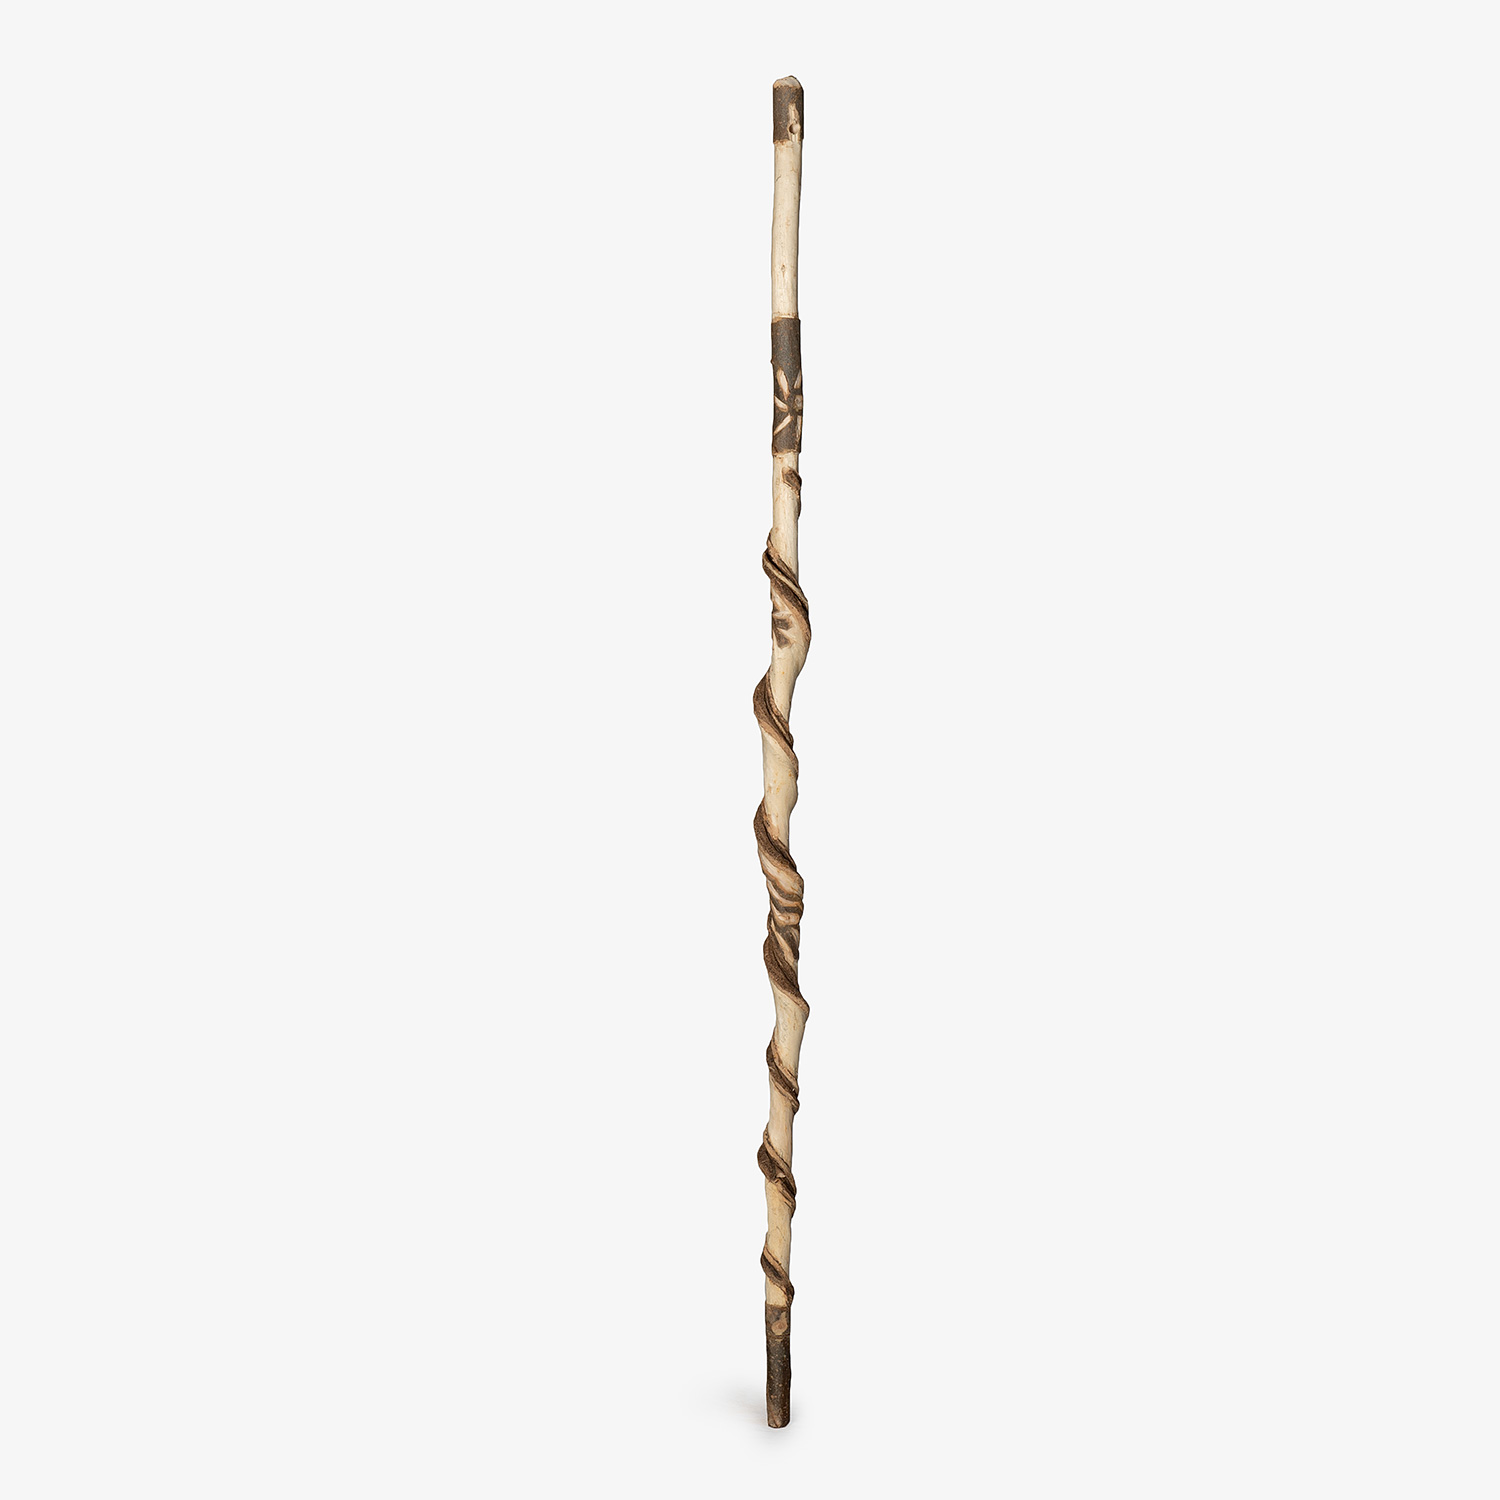 Hiking stick, 113 cm length